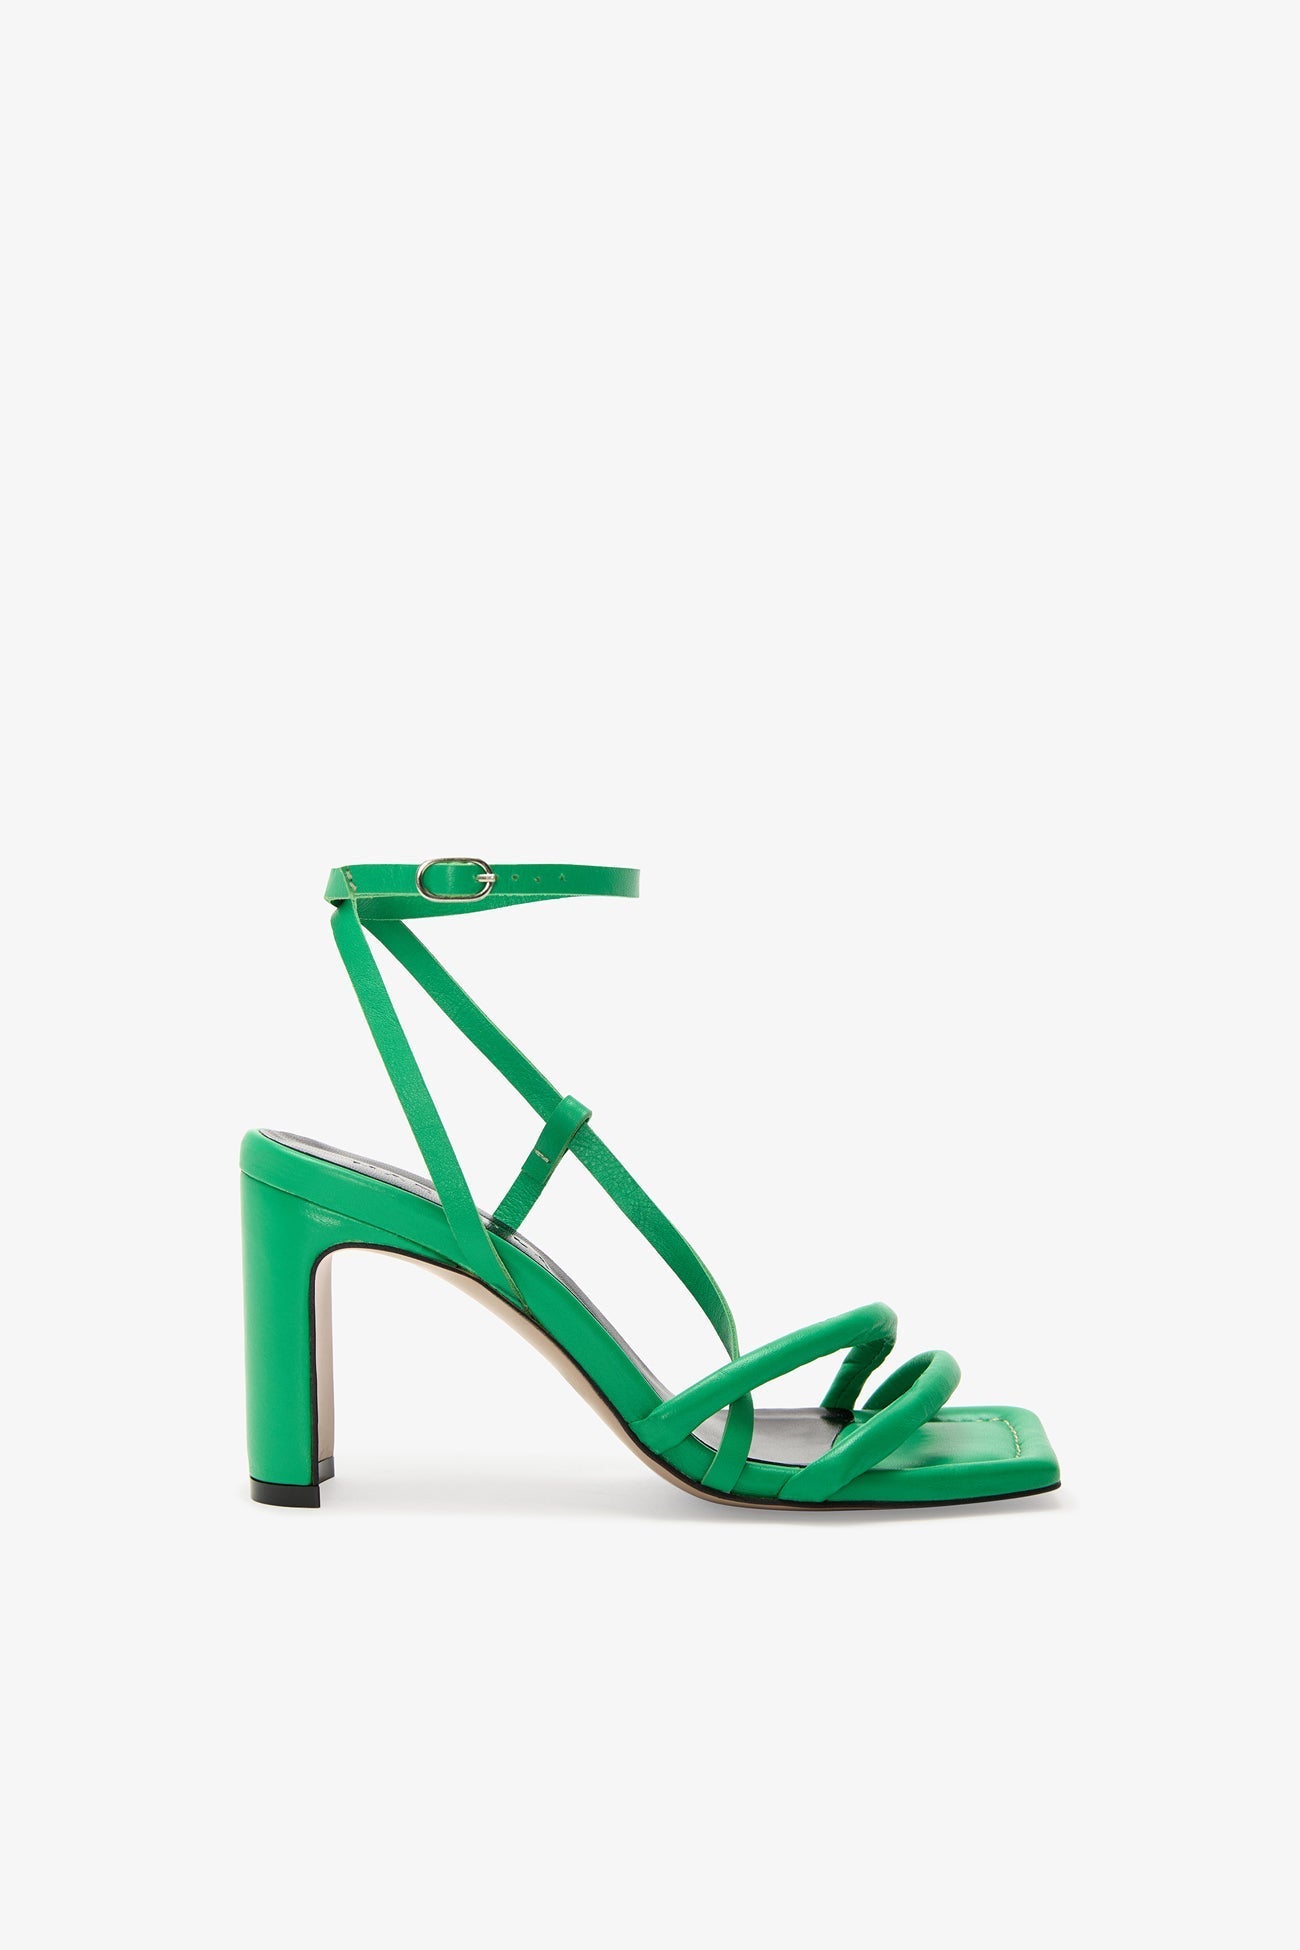 Green Square Toe Narrow Heels - Valerie Sandals | Marcella